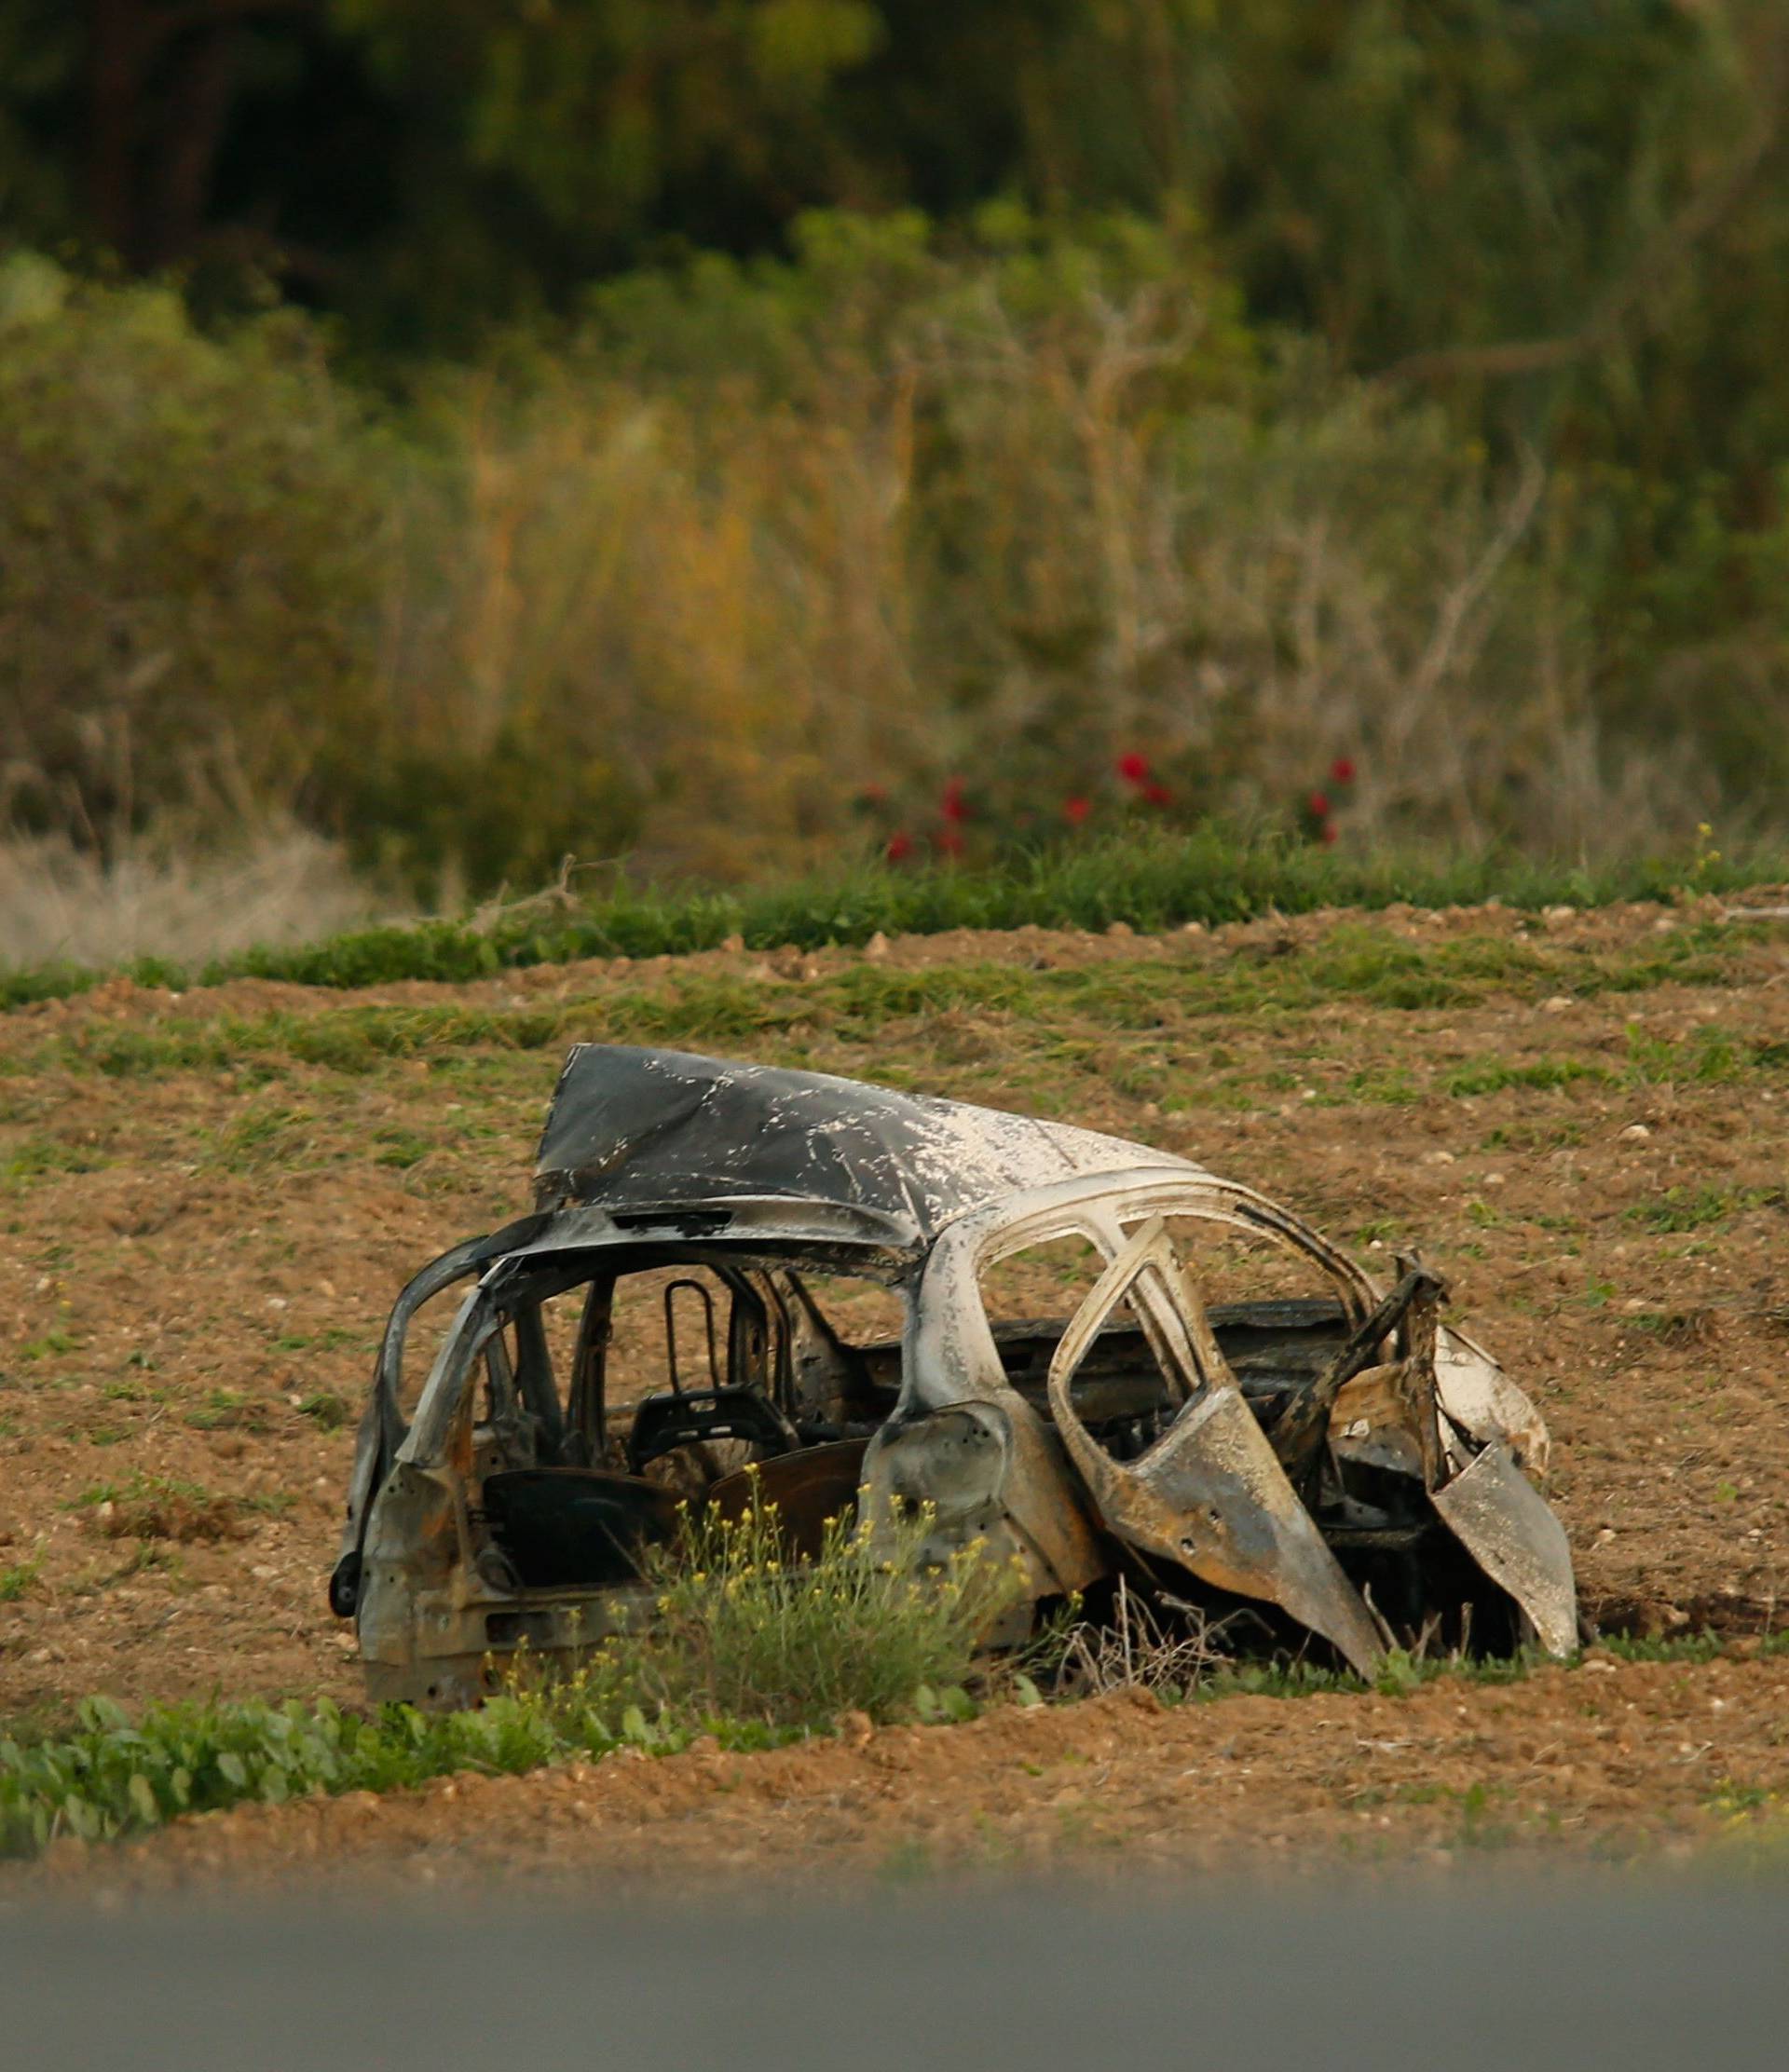 A forensics expert walks in a field after a powerful bomb blew up a car killing investigative journalist Daphne Caruana Galizia in Bidnija